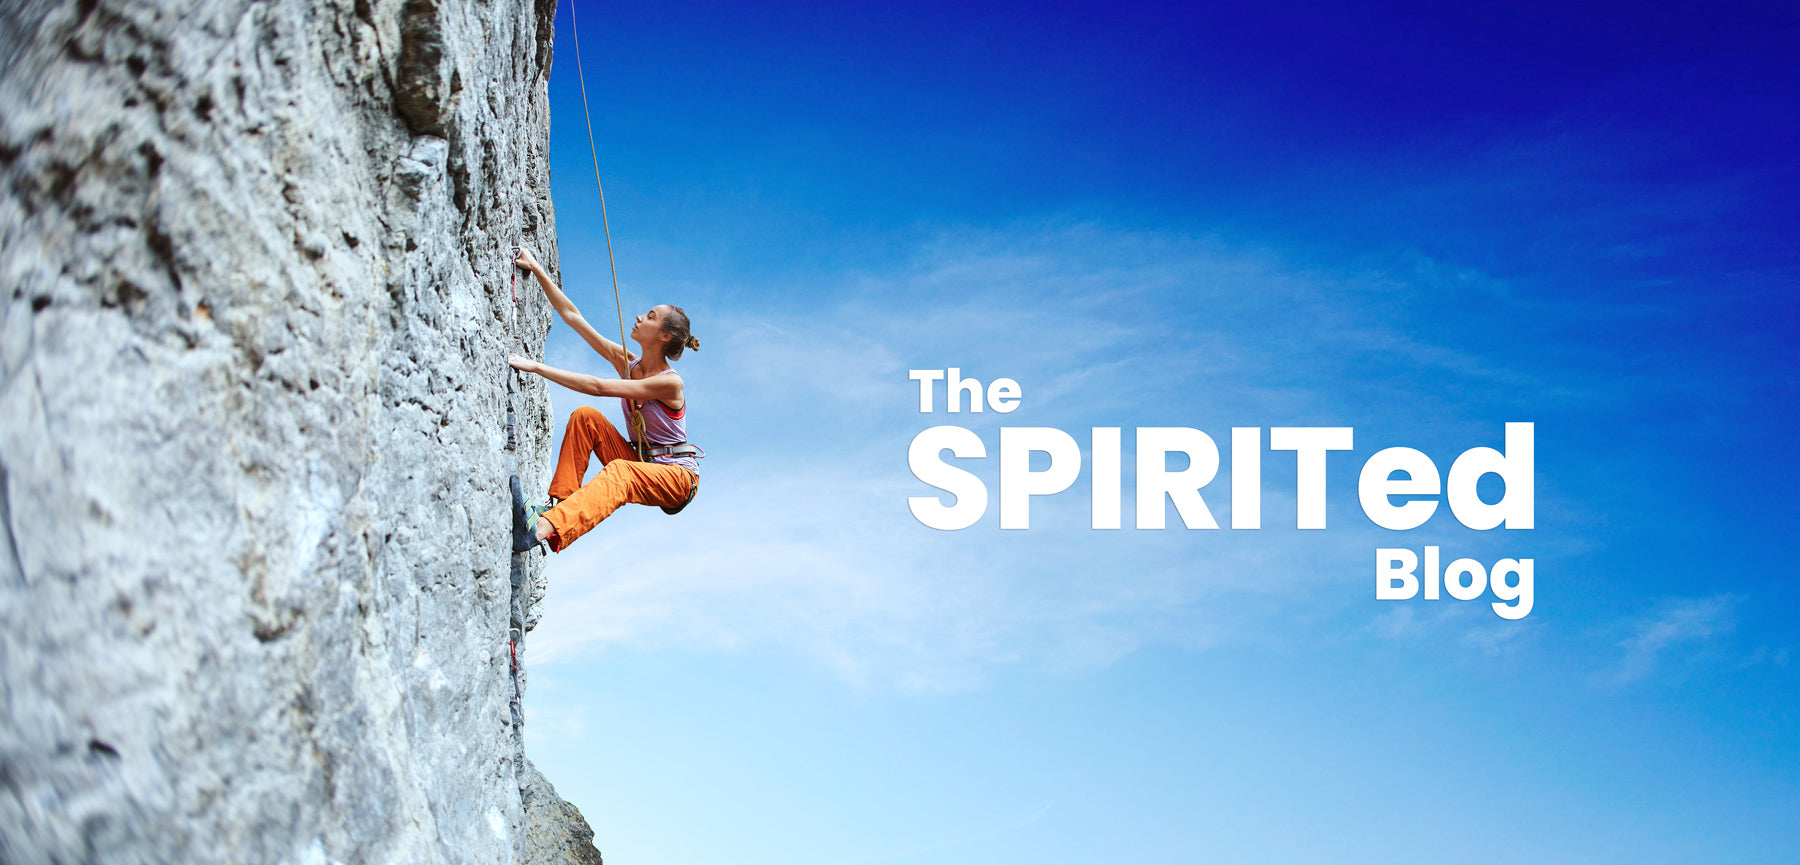 SPIRIT Almond Blog - The SPIRITed Blog, image showing a woman climbing a rock face against a blue sky